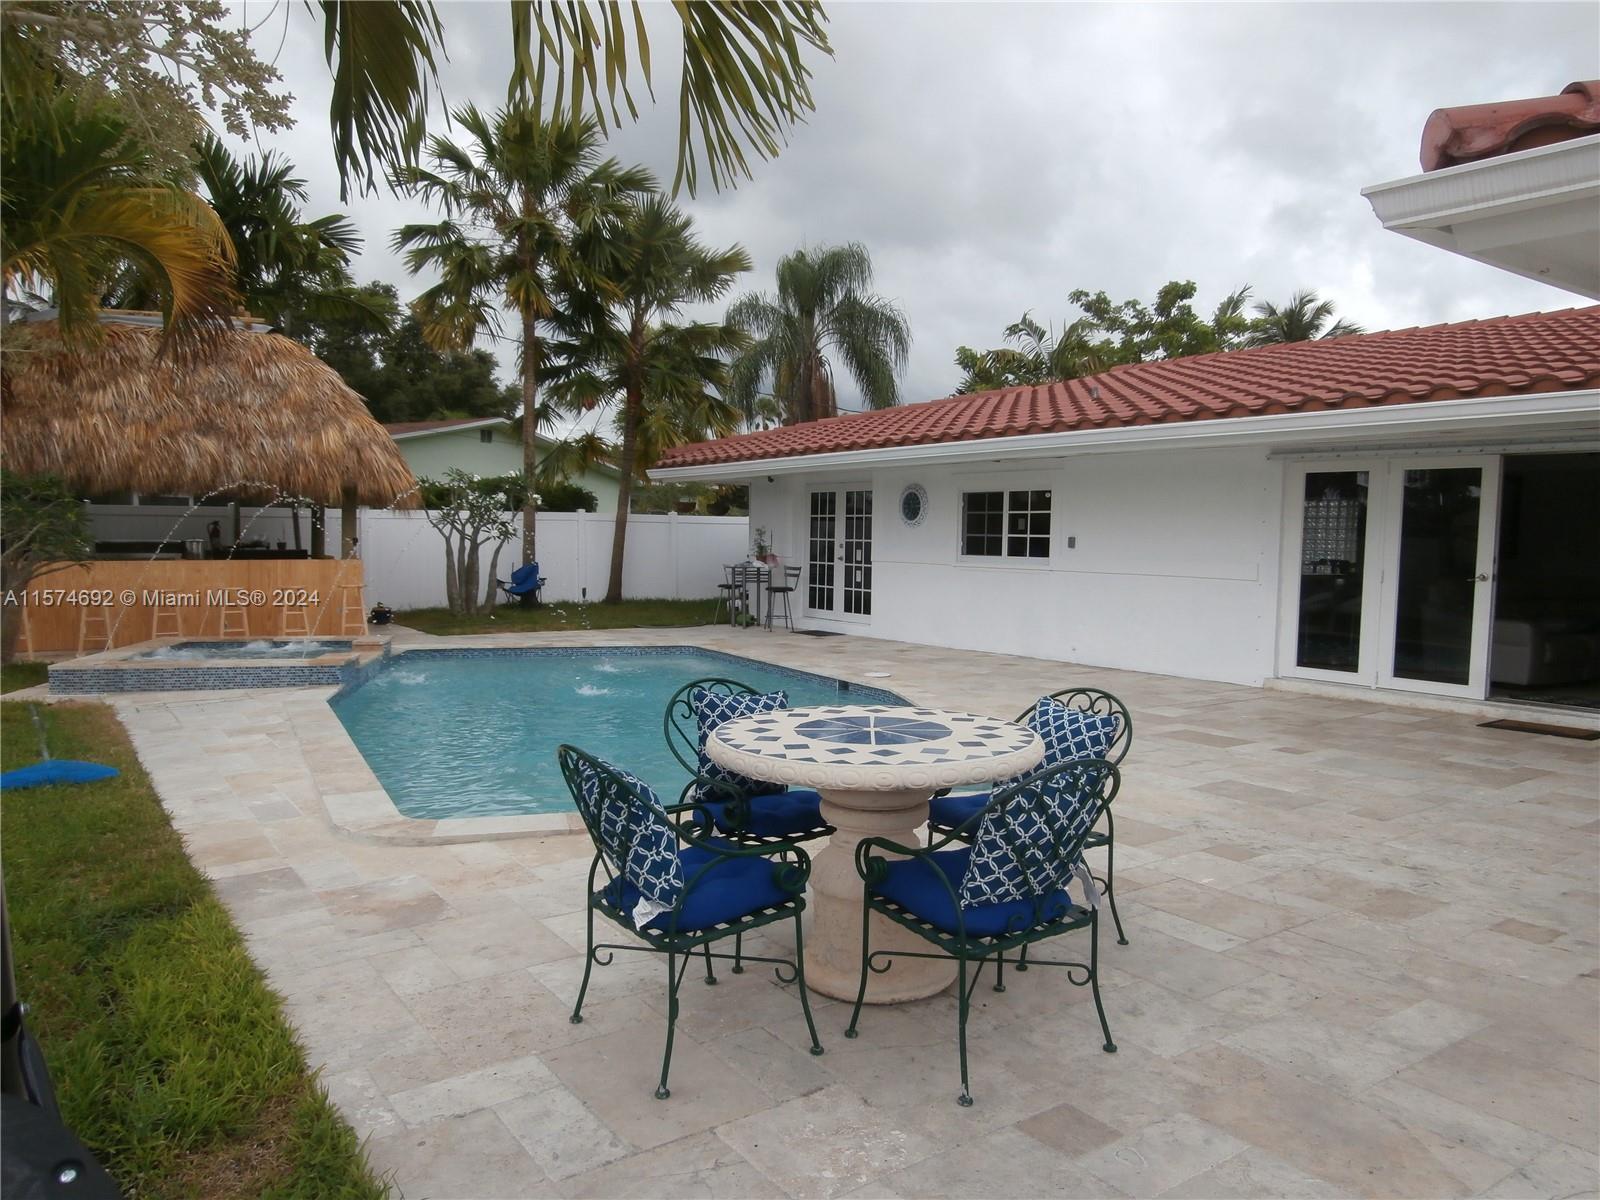 Property for Sale at 20235 Highland Lakes Blvd Blvd, Miami, Broward County, Florida - Bedrooms: 5 
Bathrooms: 3  - $1,489,000